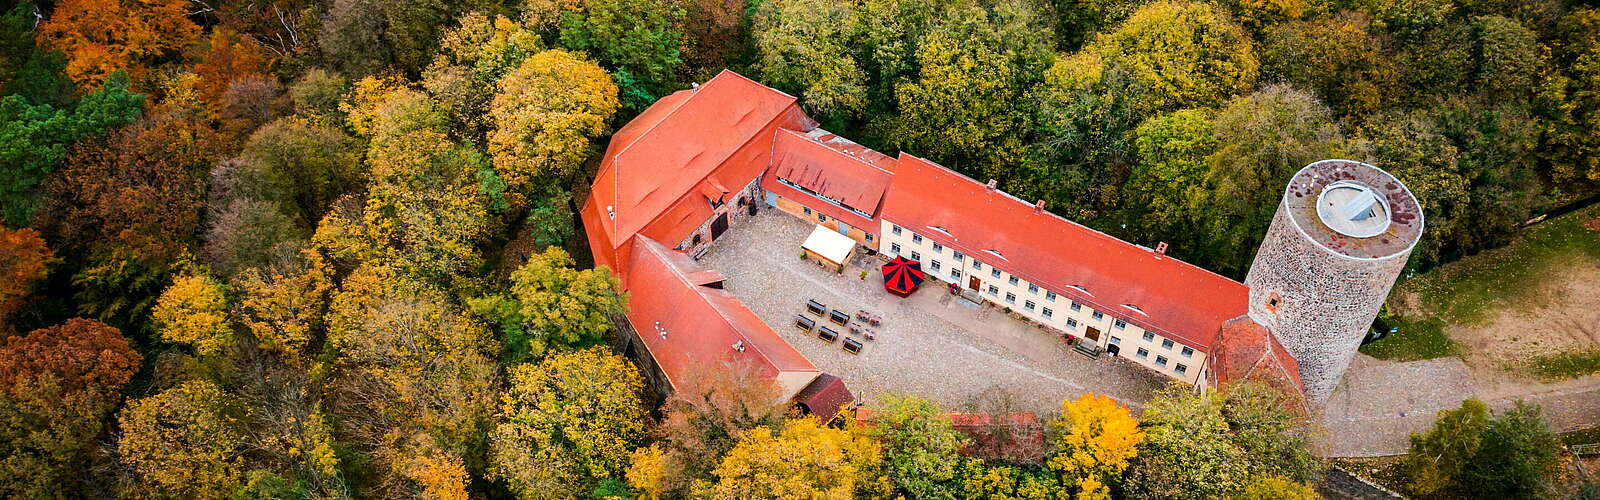 Burg Rabenstein im Herbst,
        
    

        Foto: TMB Fotoarchiv/julian hohlfeld